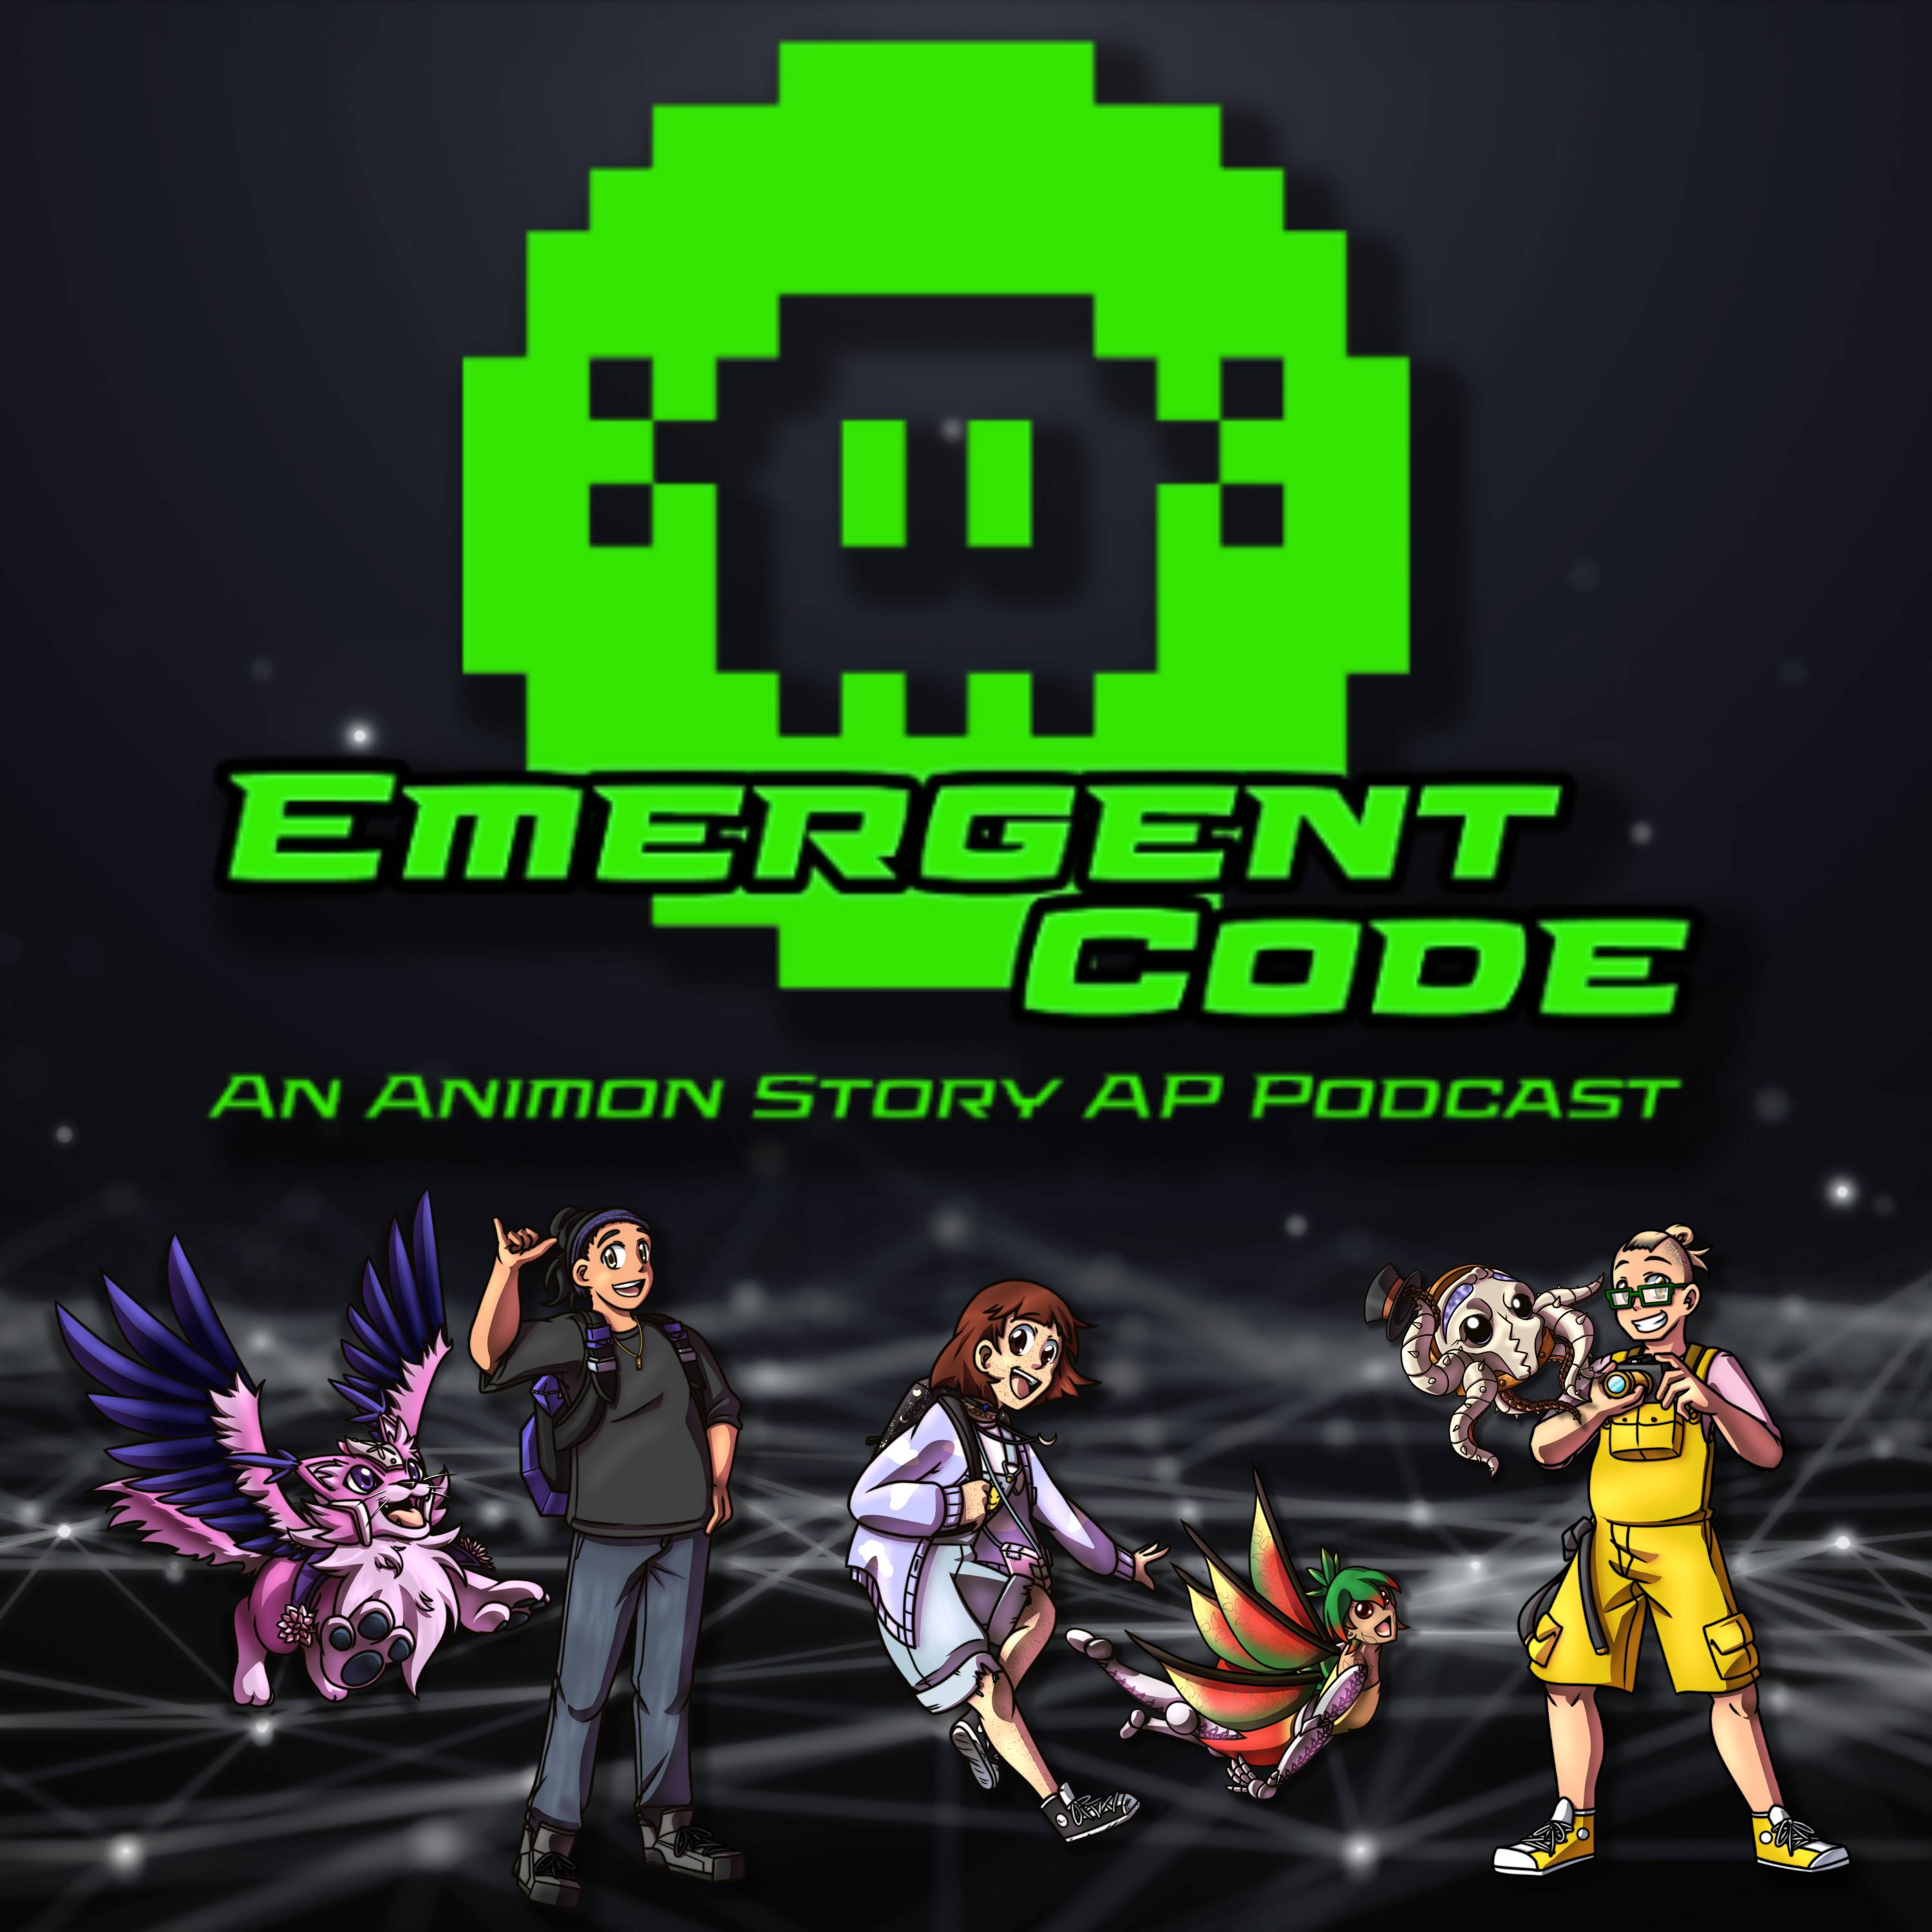 Artwork for Emergent Code